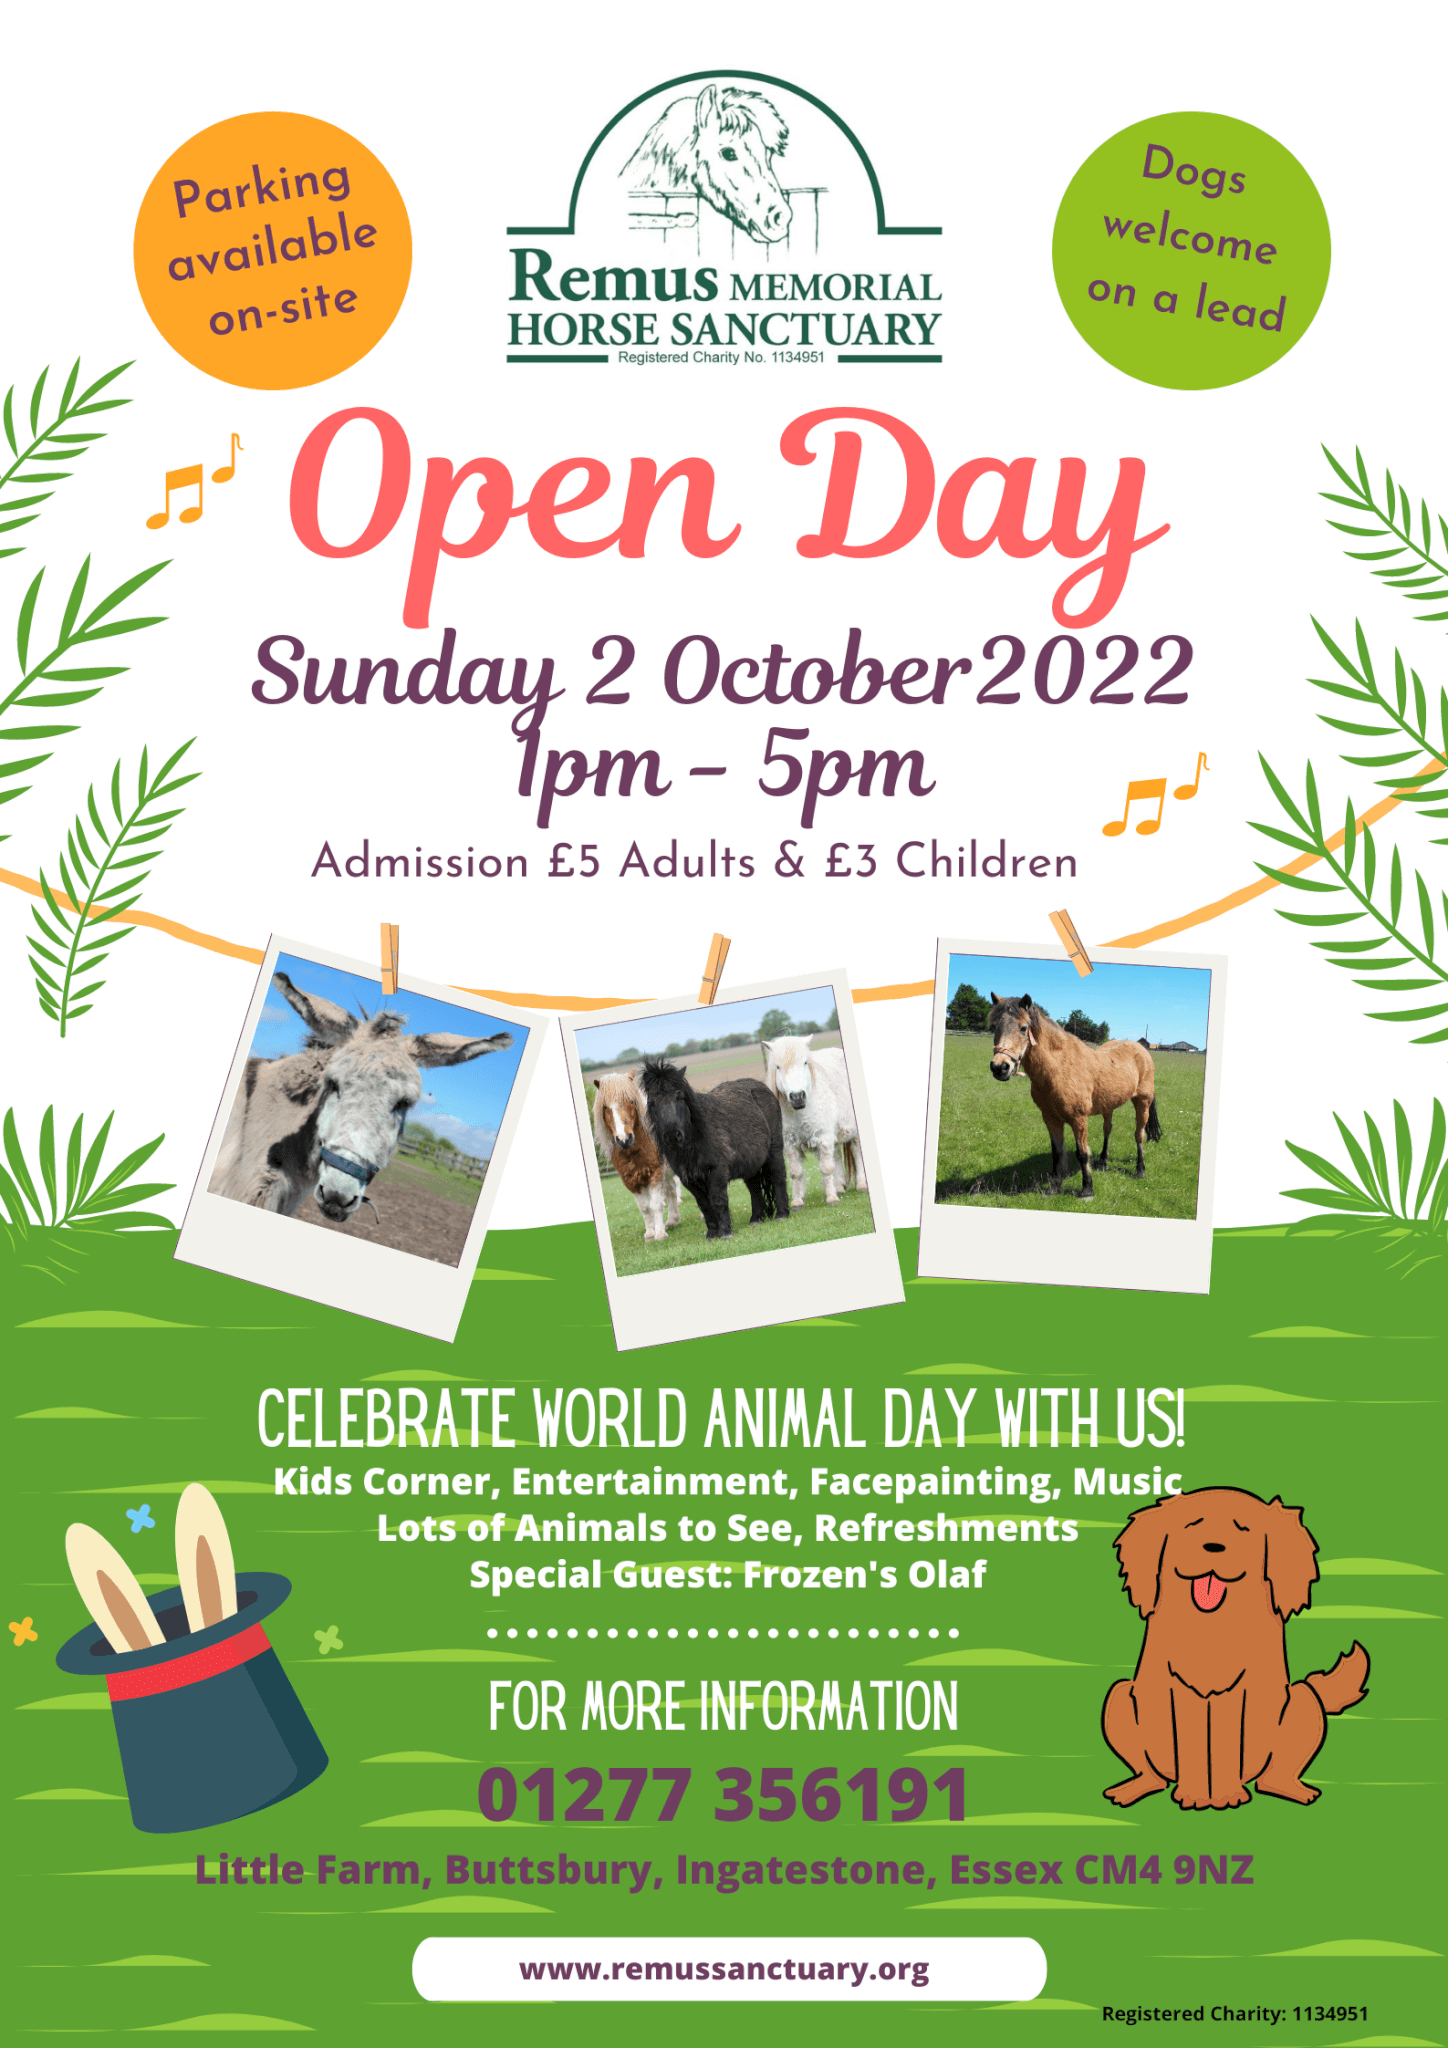 Celebrate World Animal Day at Remus Horse Sanctuary on Sunday 2 October 2022